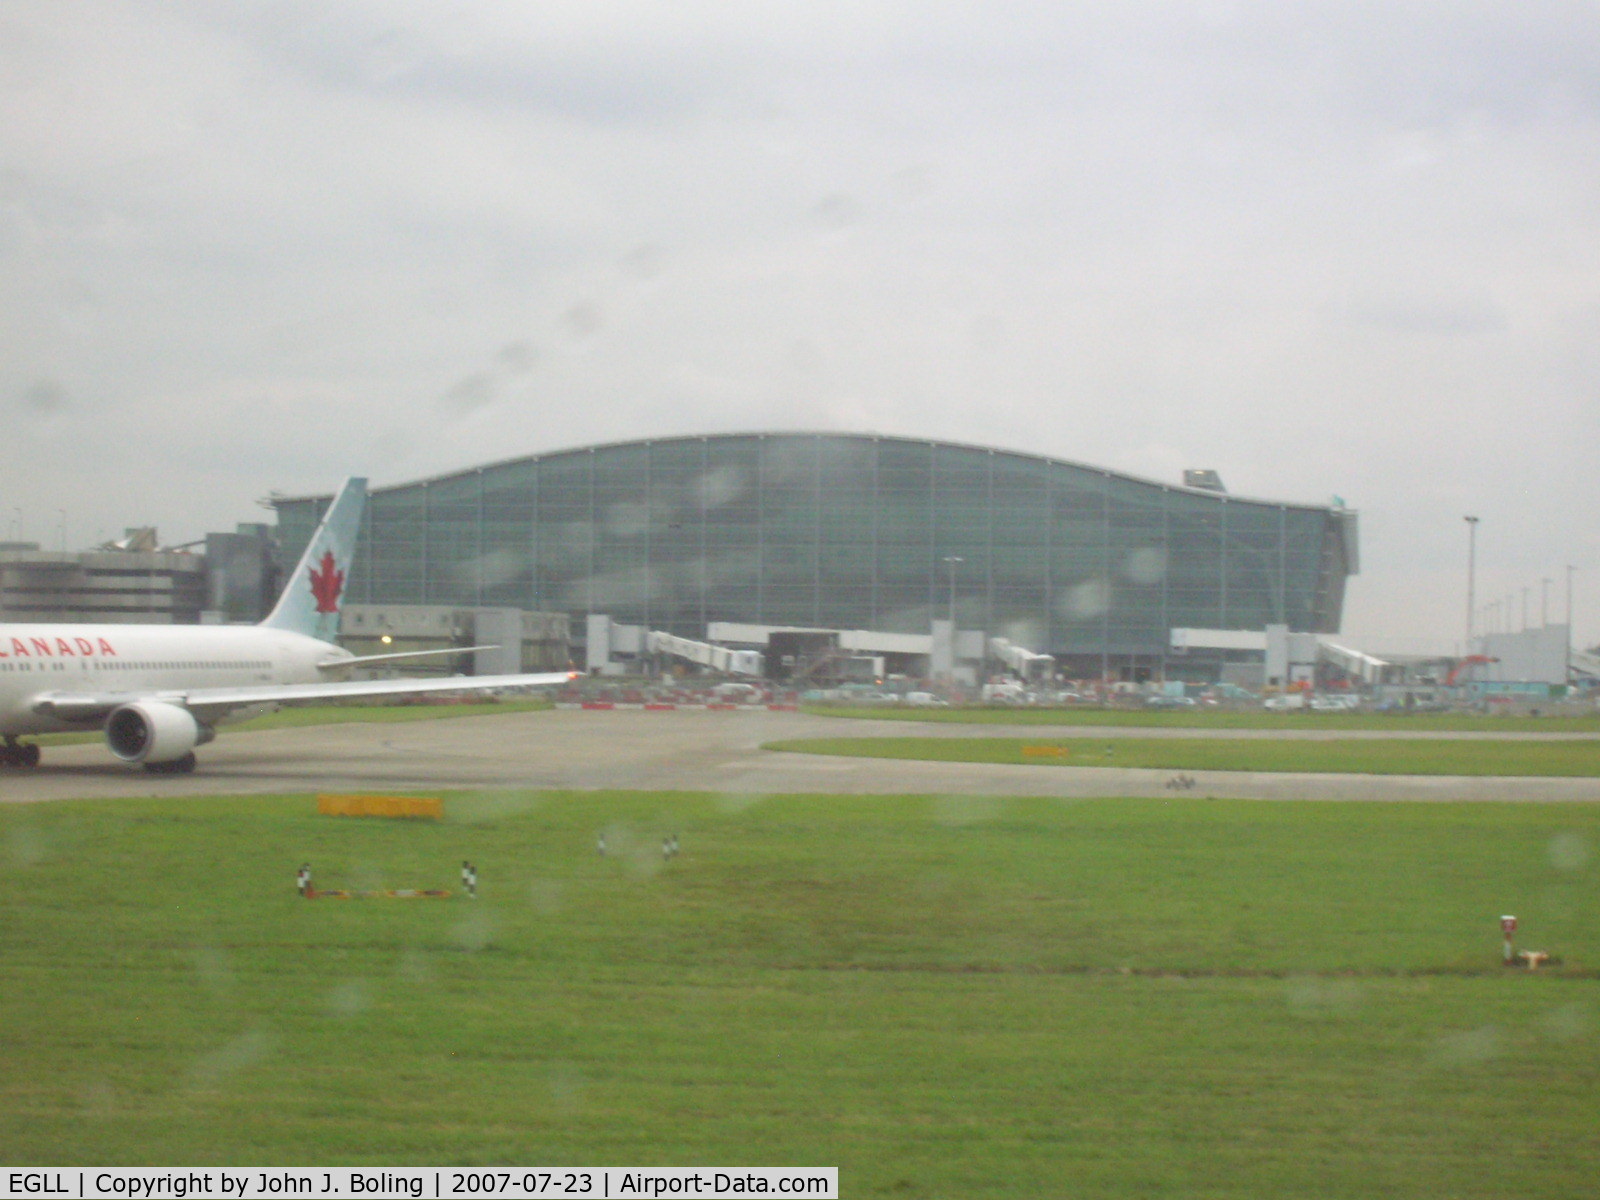 London Heathrow Airport, London, England United Kingdom (EGLL) - New Terminal Five under construction at Heathrow